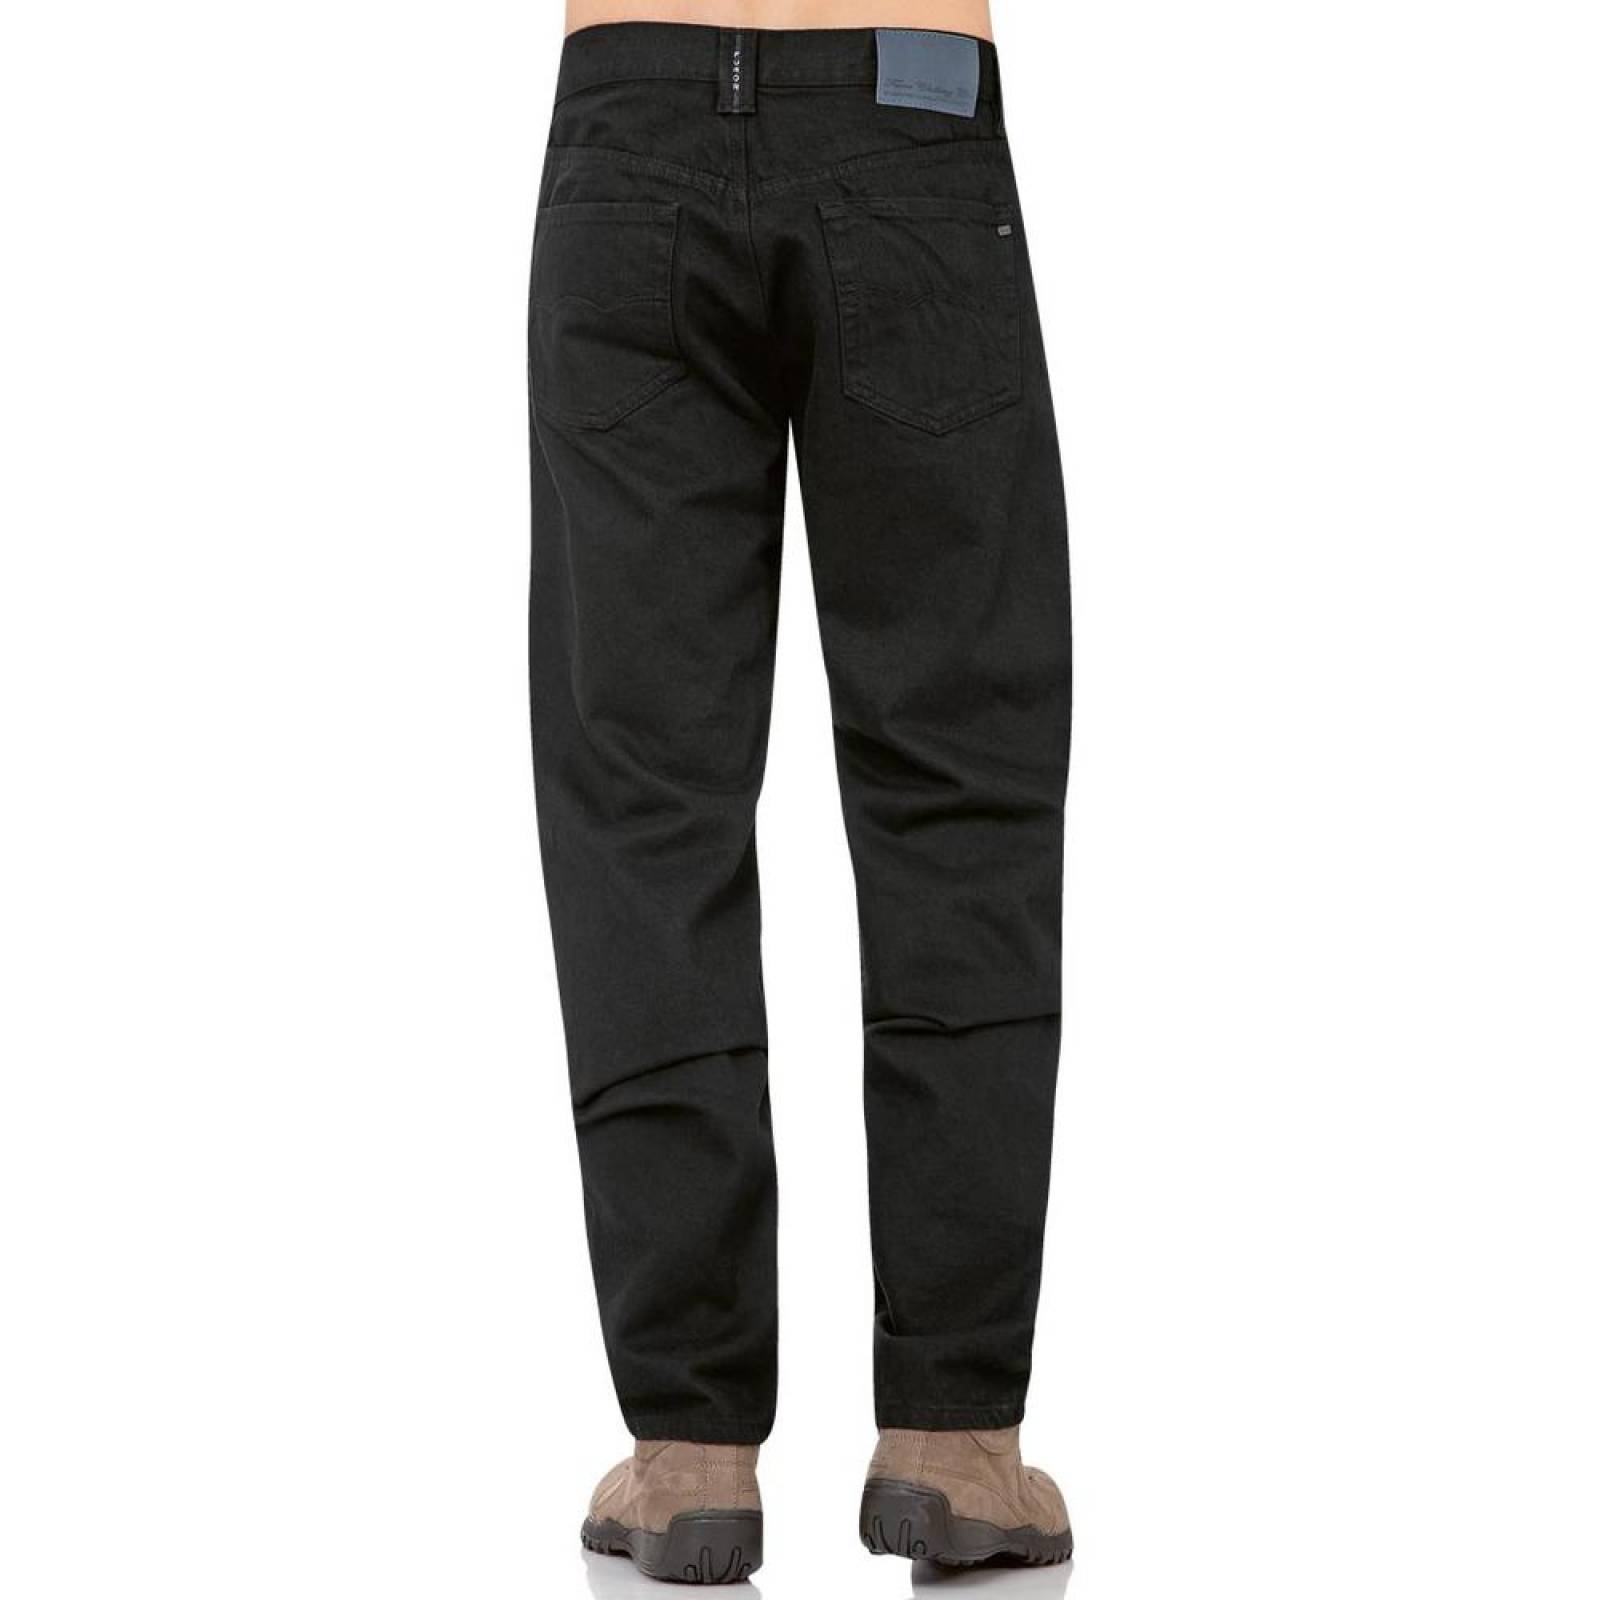 Jeans Básico Hombre Furor Black 62111222 Mezclilla 